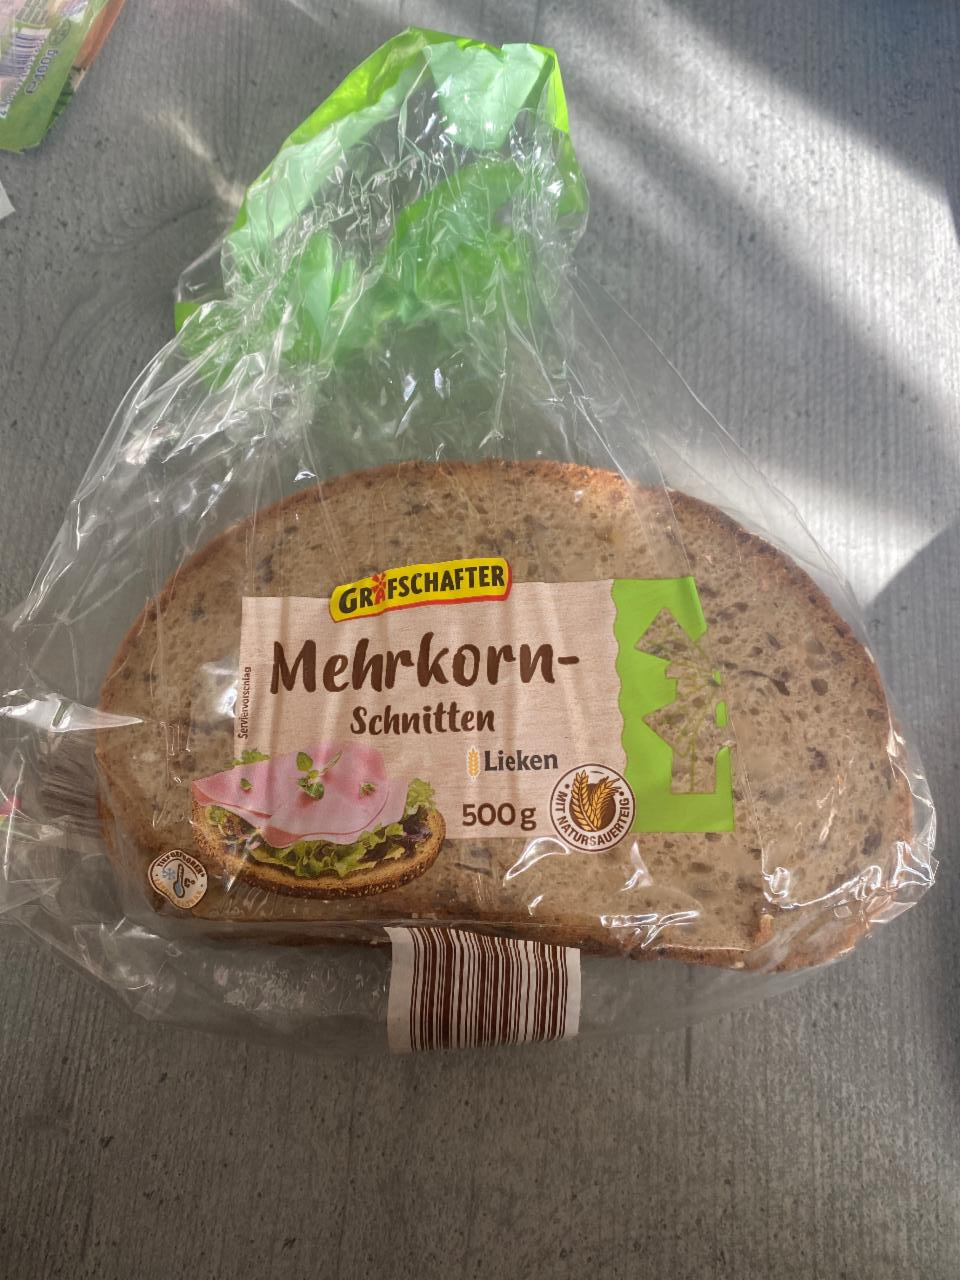 Фото - хлеб зерновой Mehrkorn-Schnitten Grafschafter